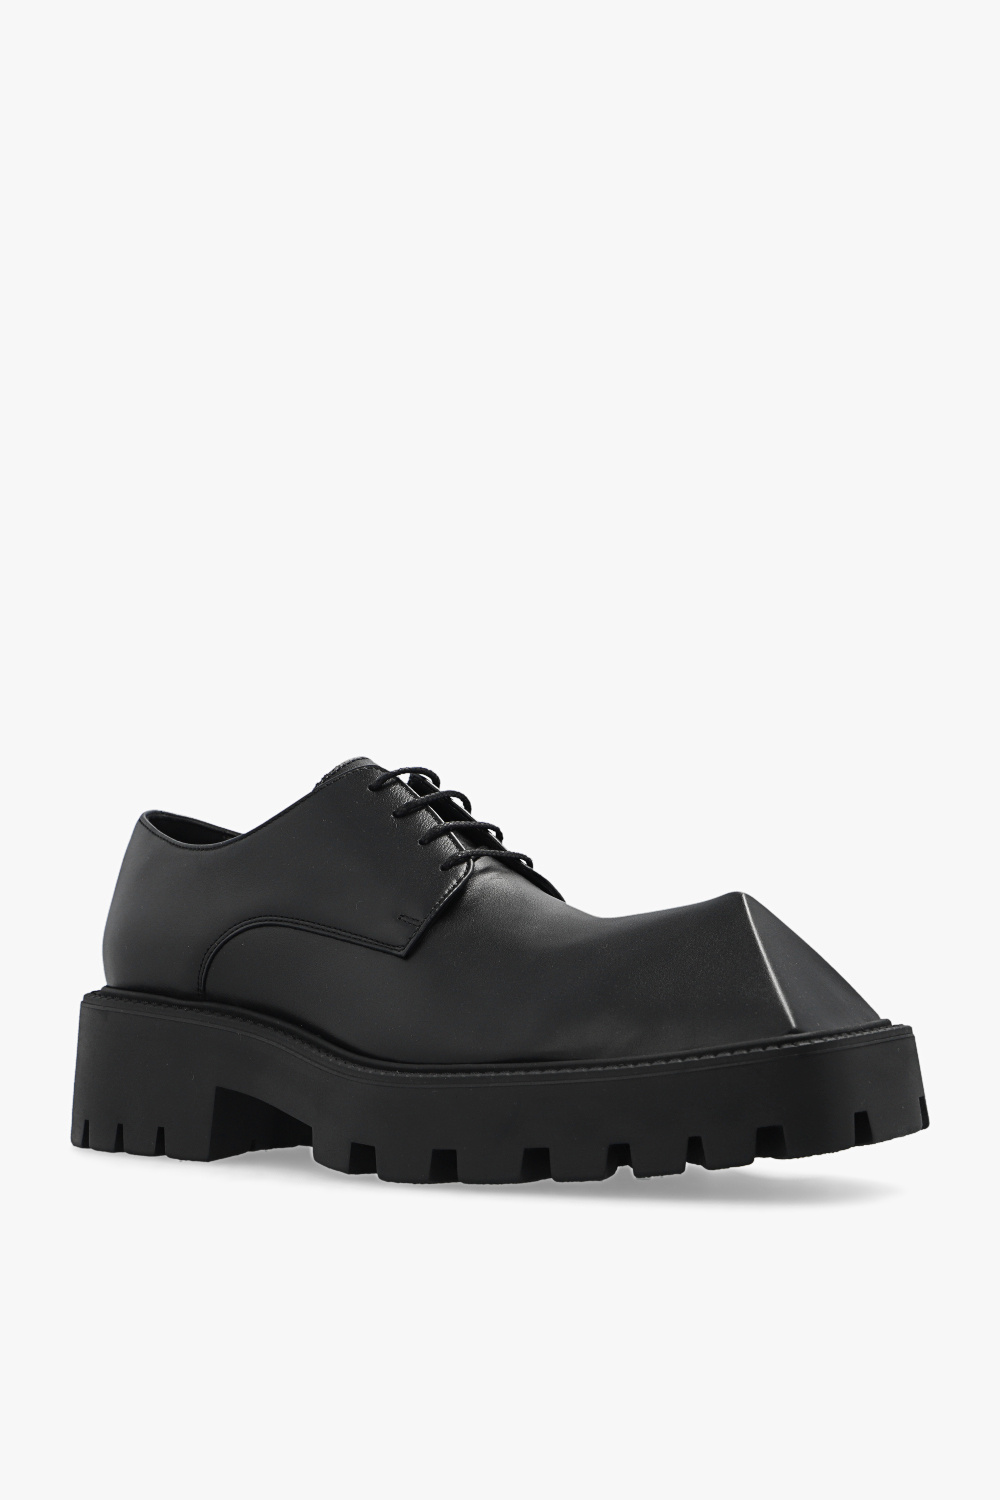 Black ‘Rhino’ leather derby shoes Balenciaga - Vitkac Germany